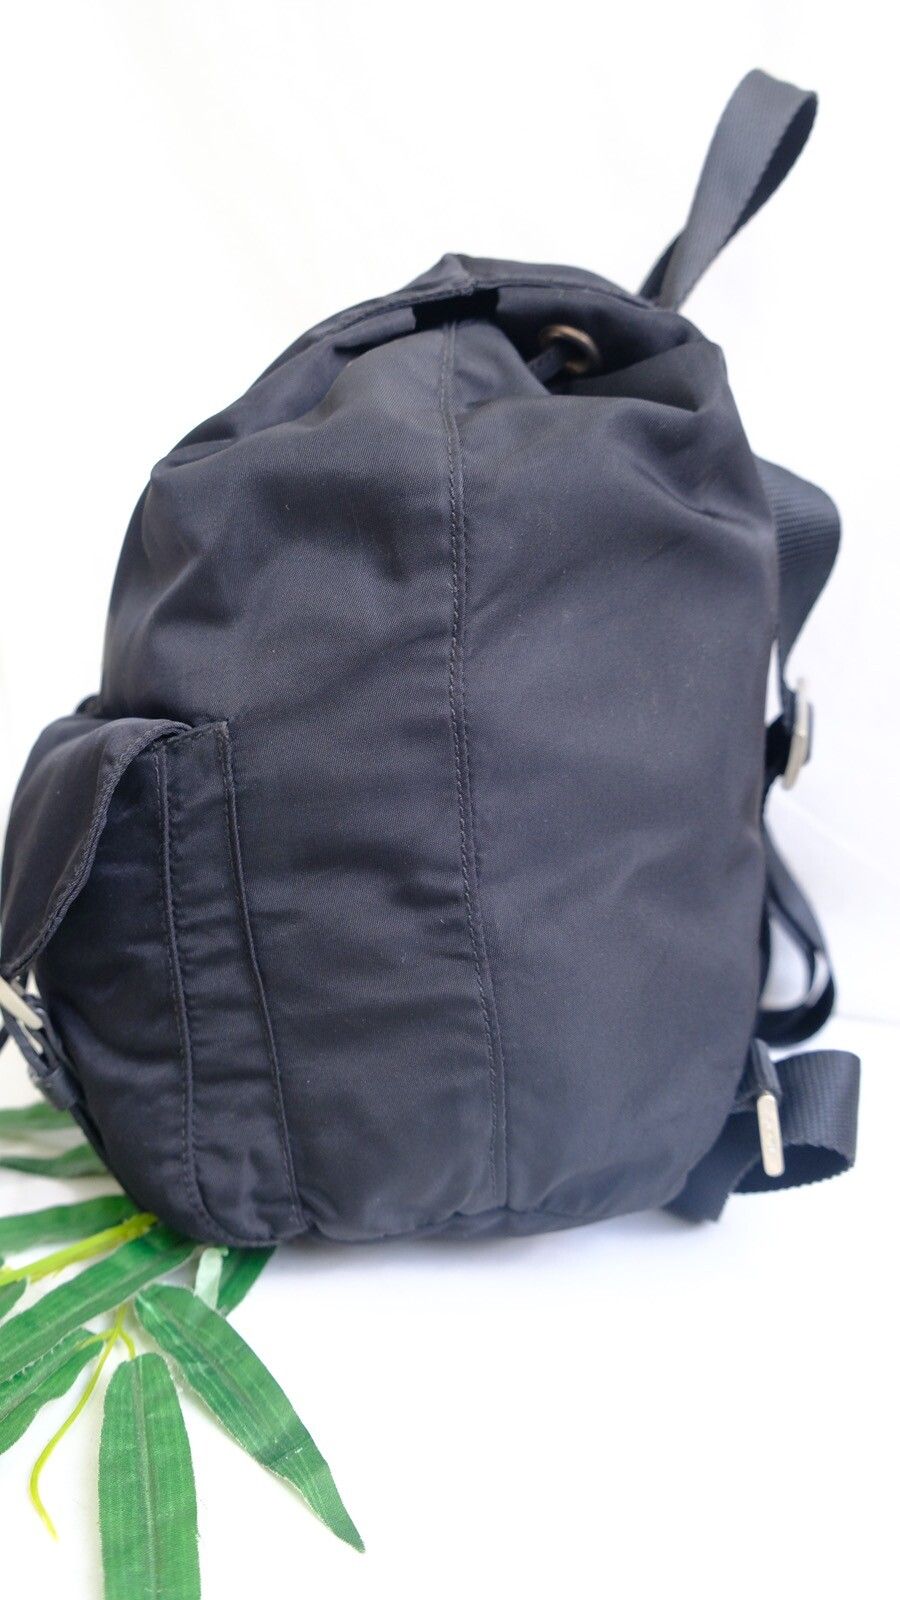 Authentic prada backpack black nylone double pocket - 5